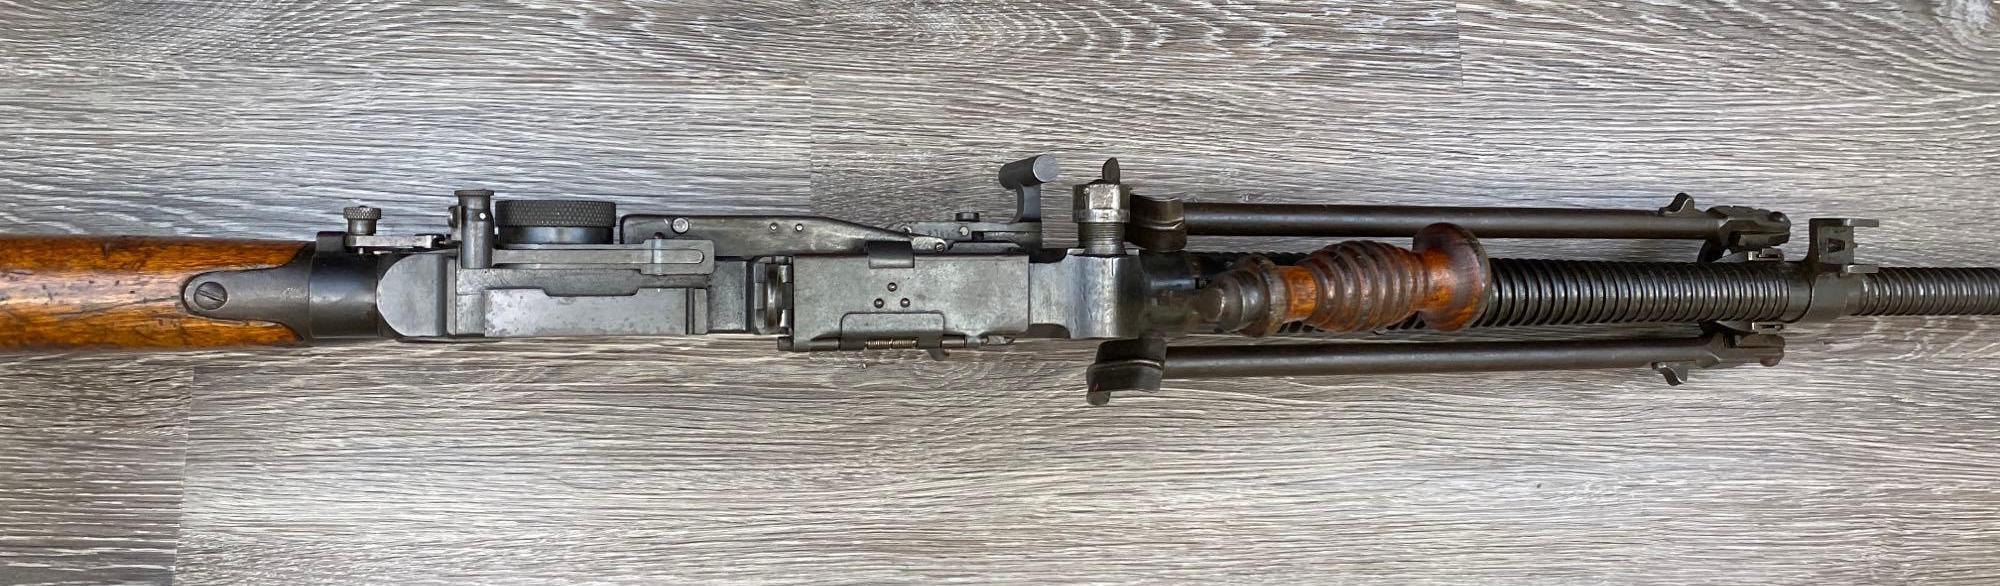 DEMILLED 1942 WWII JAPANESE TYPE 99 LIGHT MACHINE GUN 7.7 CAL